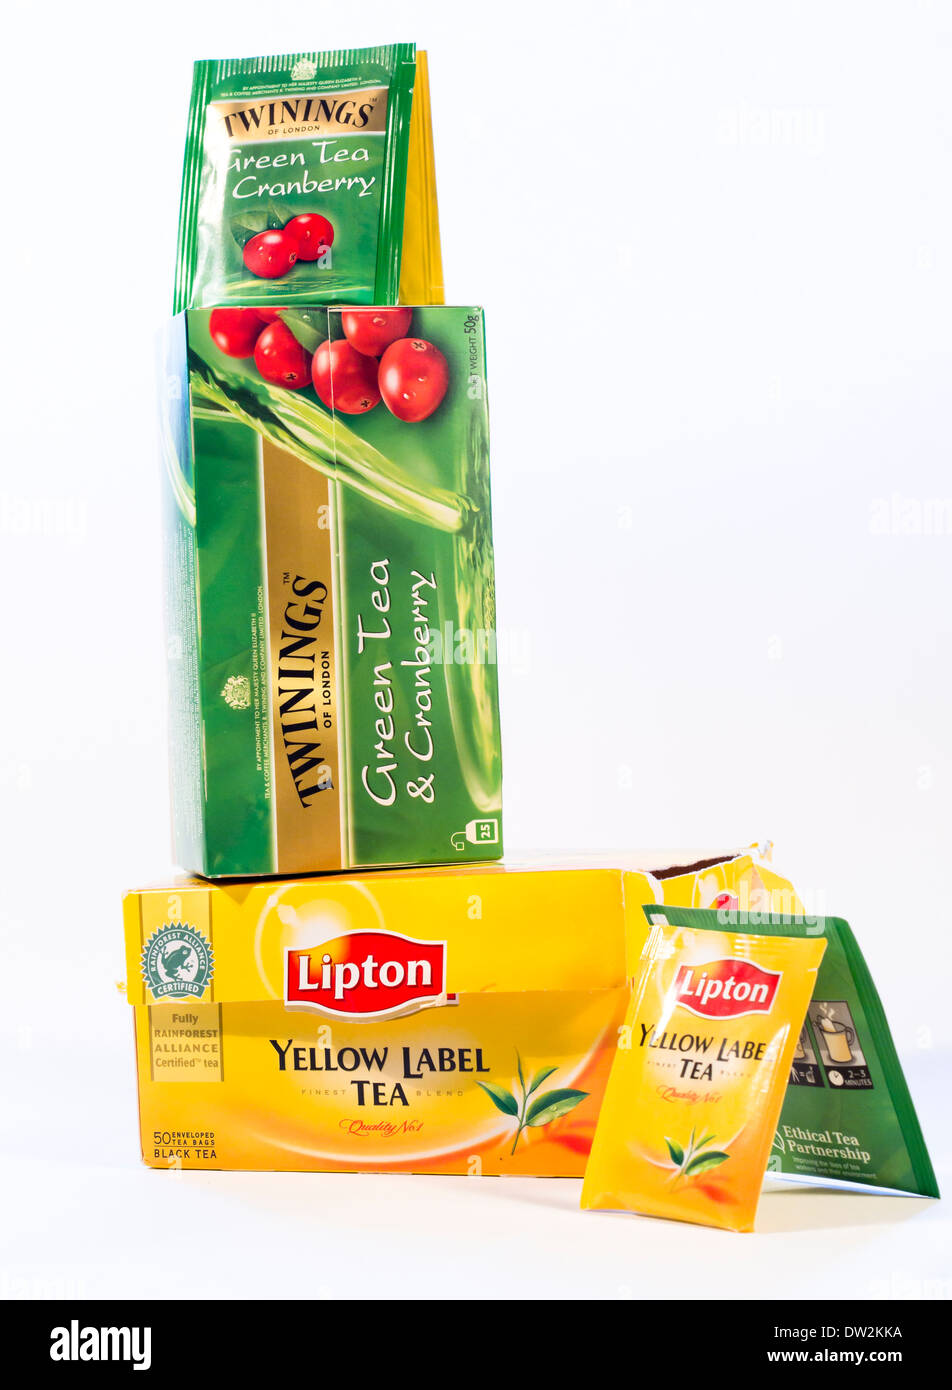 Lipton or Twining, black tea or green tea, yellow or green boxes and teabags on white background Stock Photo